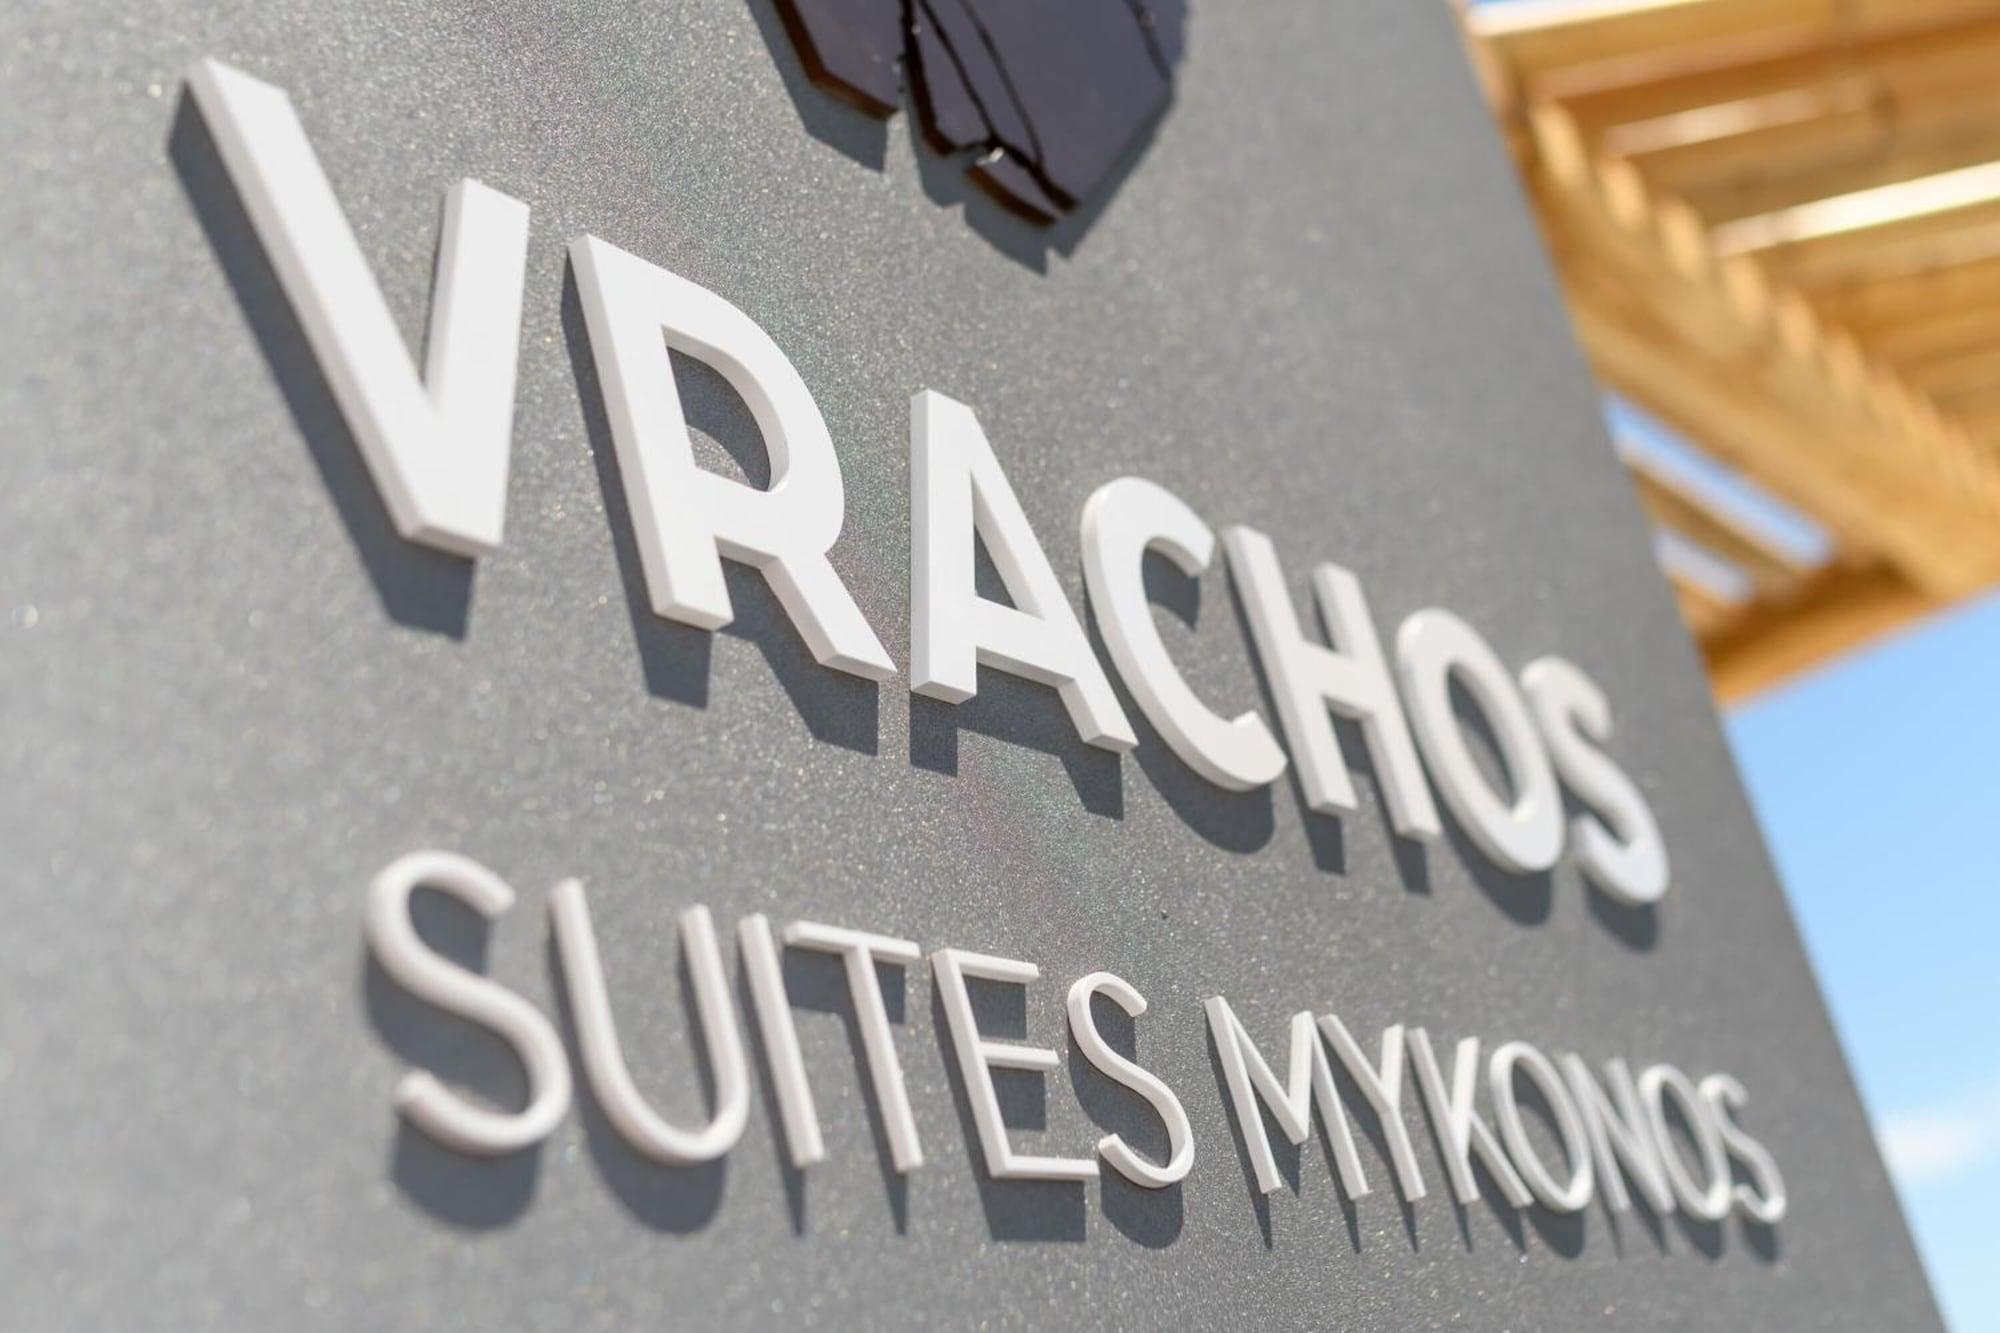 Vista Exterior Vrachos Suites Mykonos